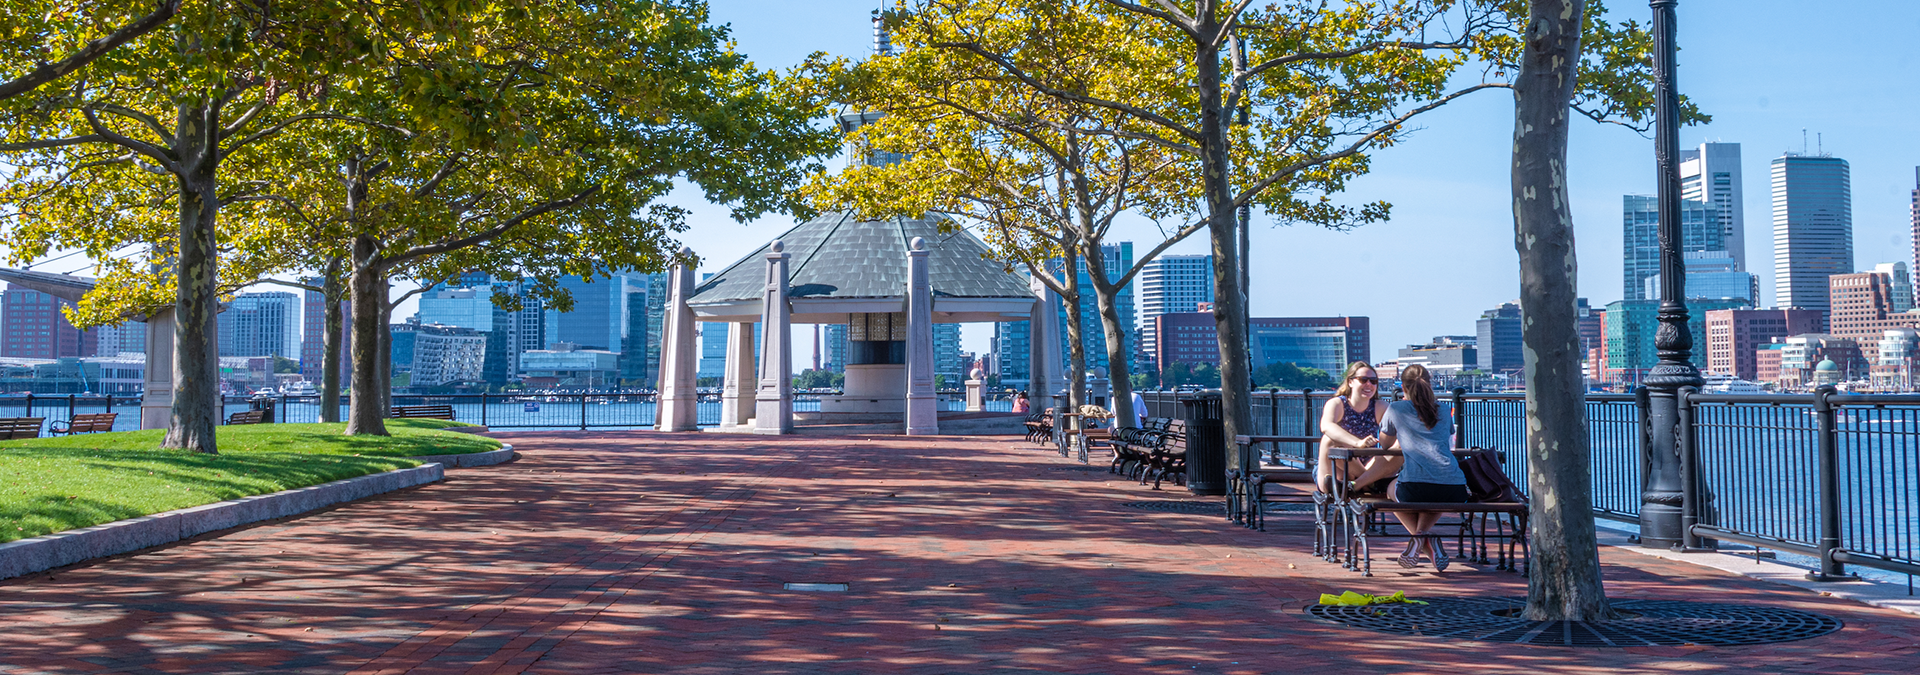 Piers Park in the Summer overlooking Boston Harbor